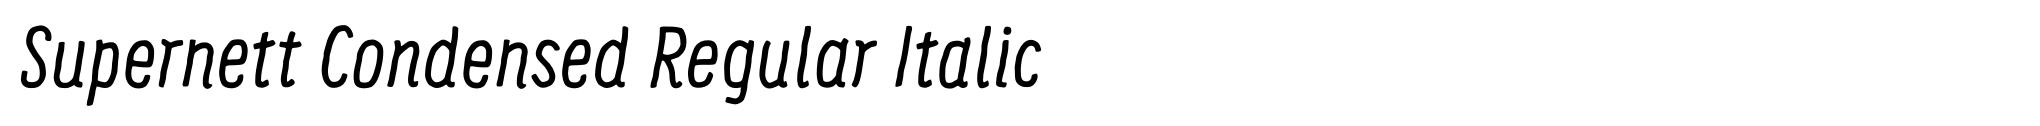 Supernett Condensed Regular Italic image